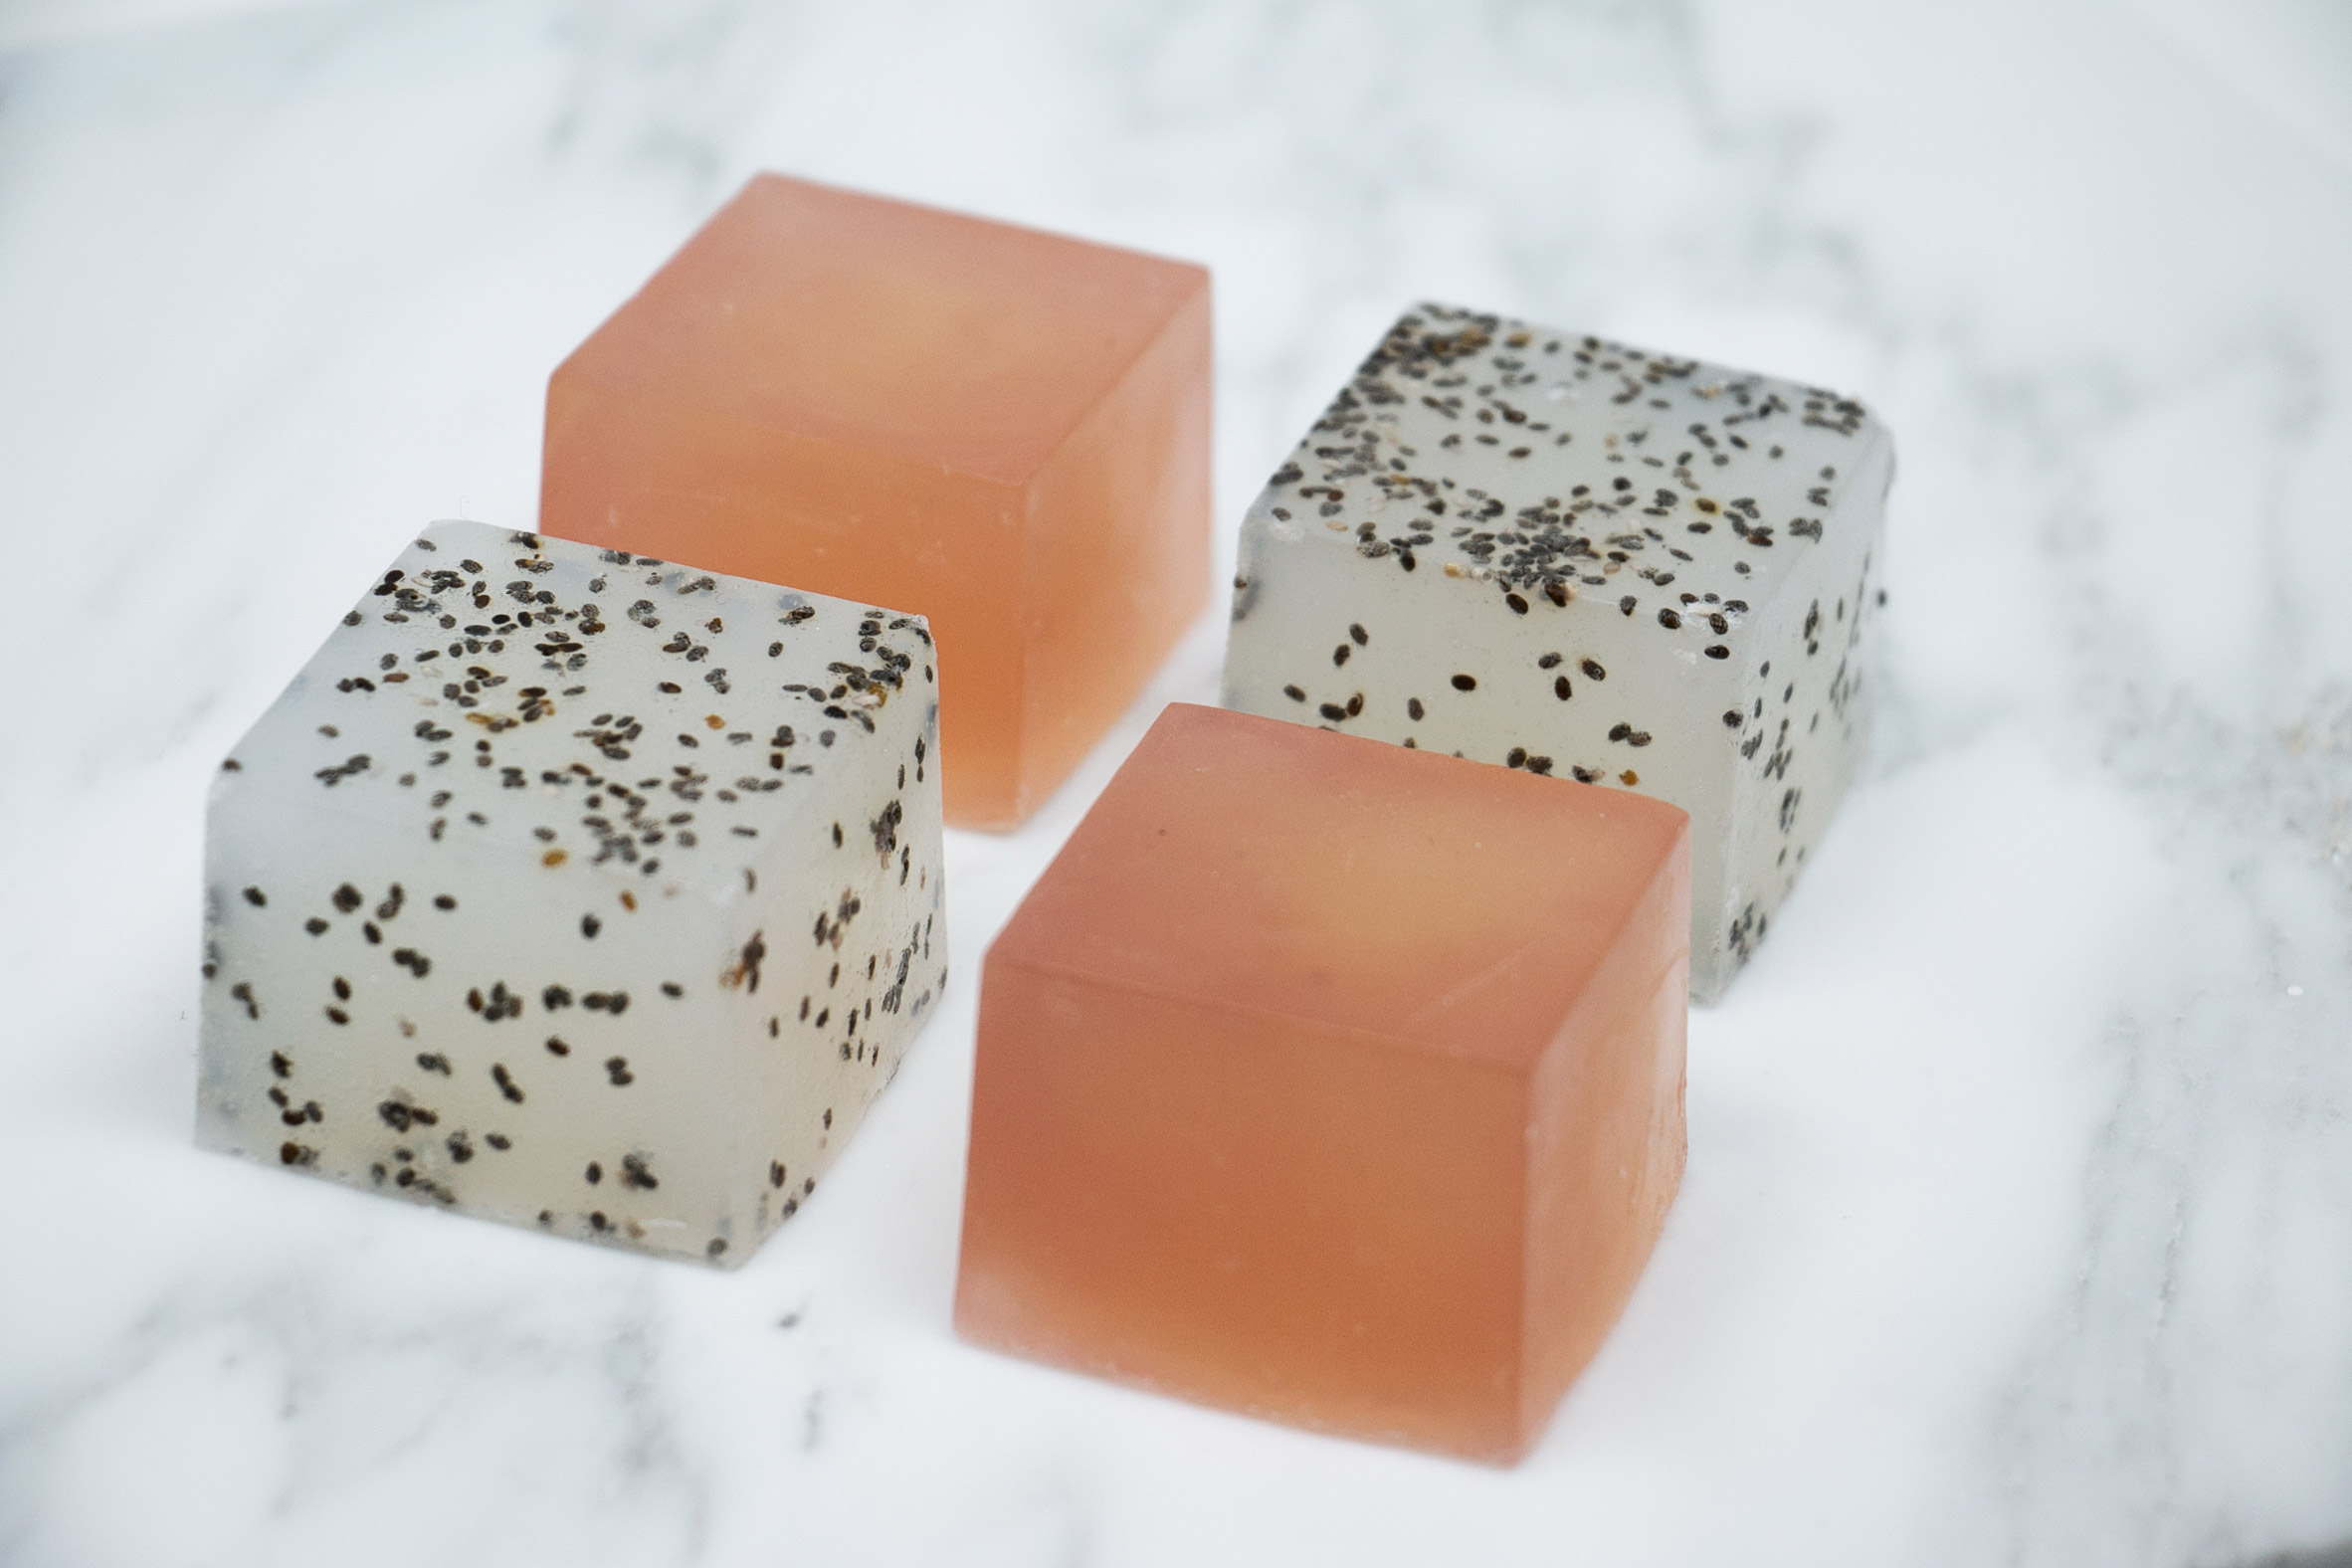 Danielle Coffey's Sápu device turns household fats into soap